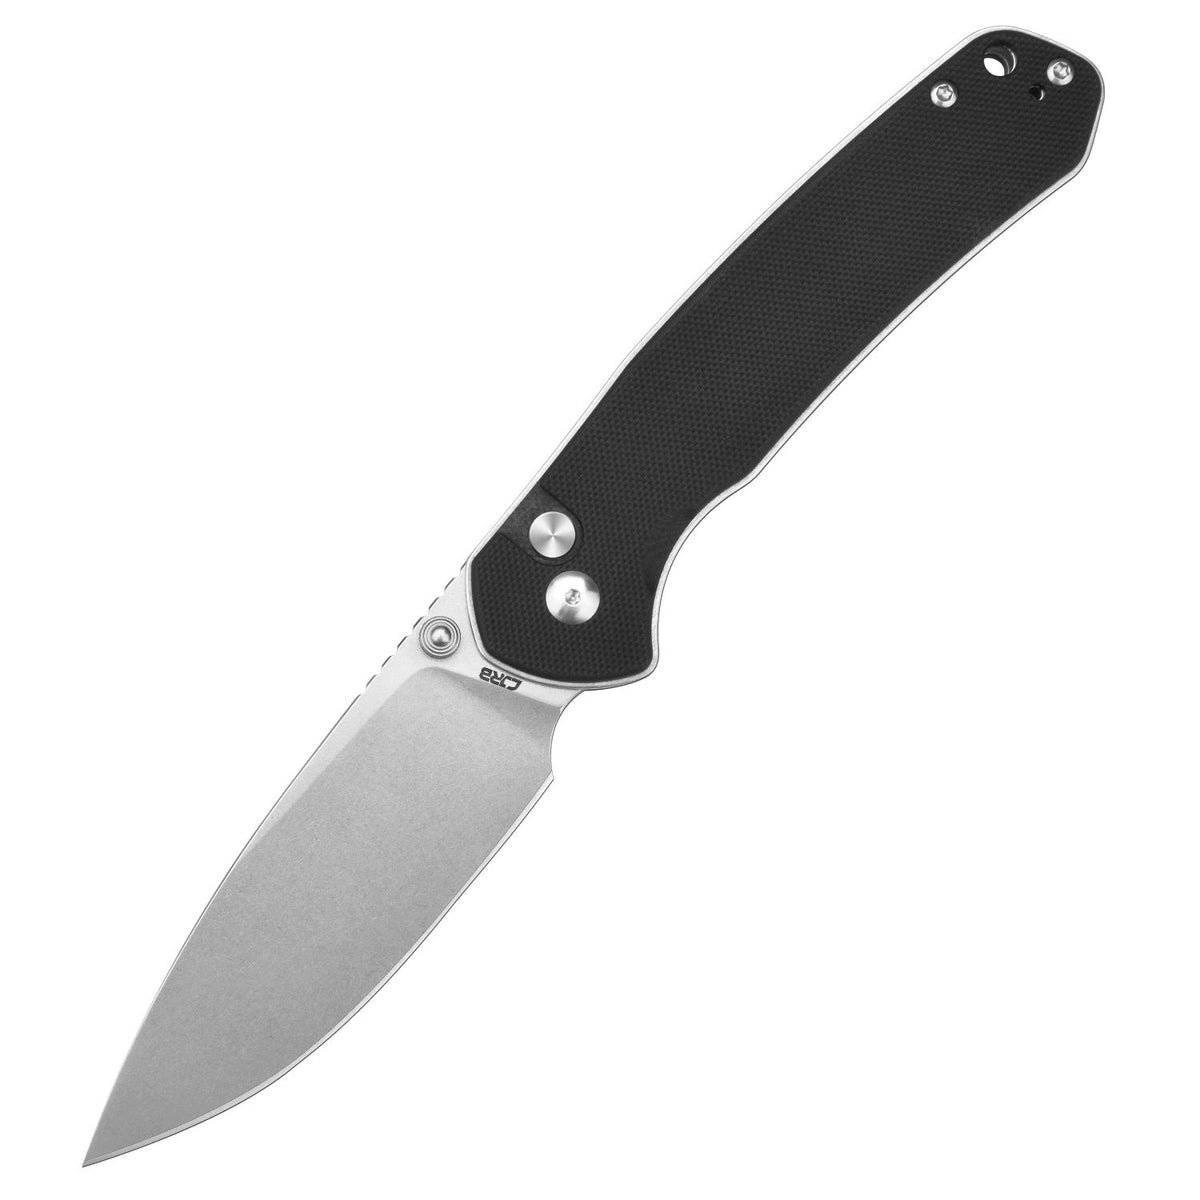 CJRB Large Pyrite Folding Knife - AR-RPM9 Blade, Steel Handle